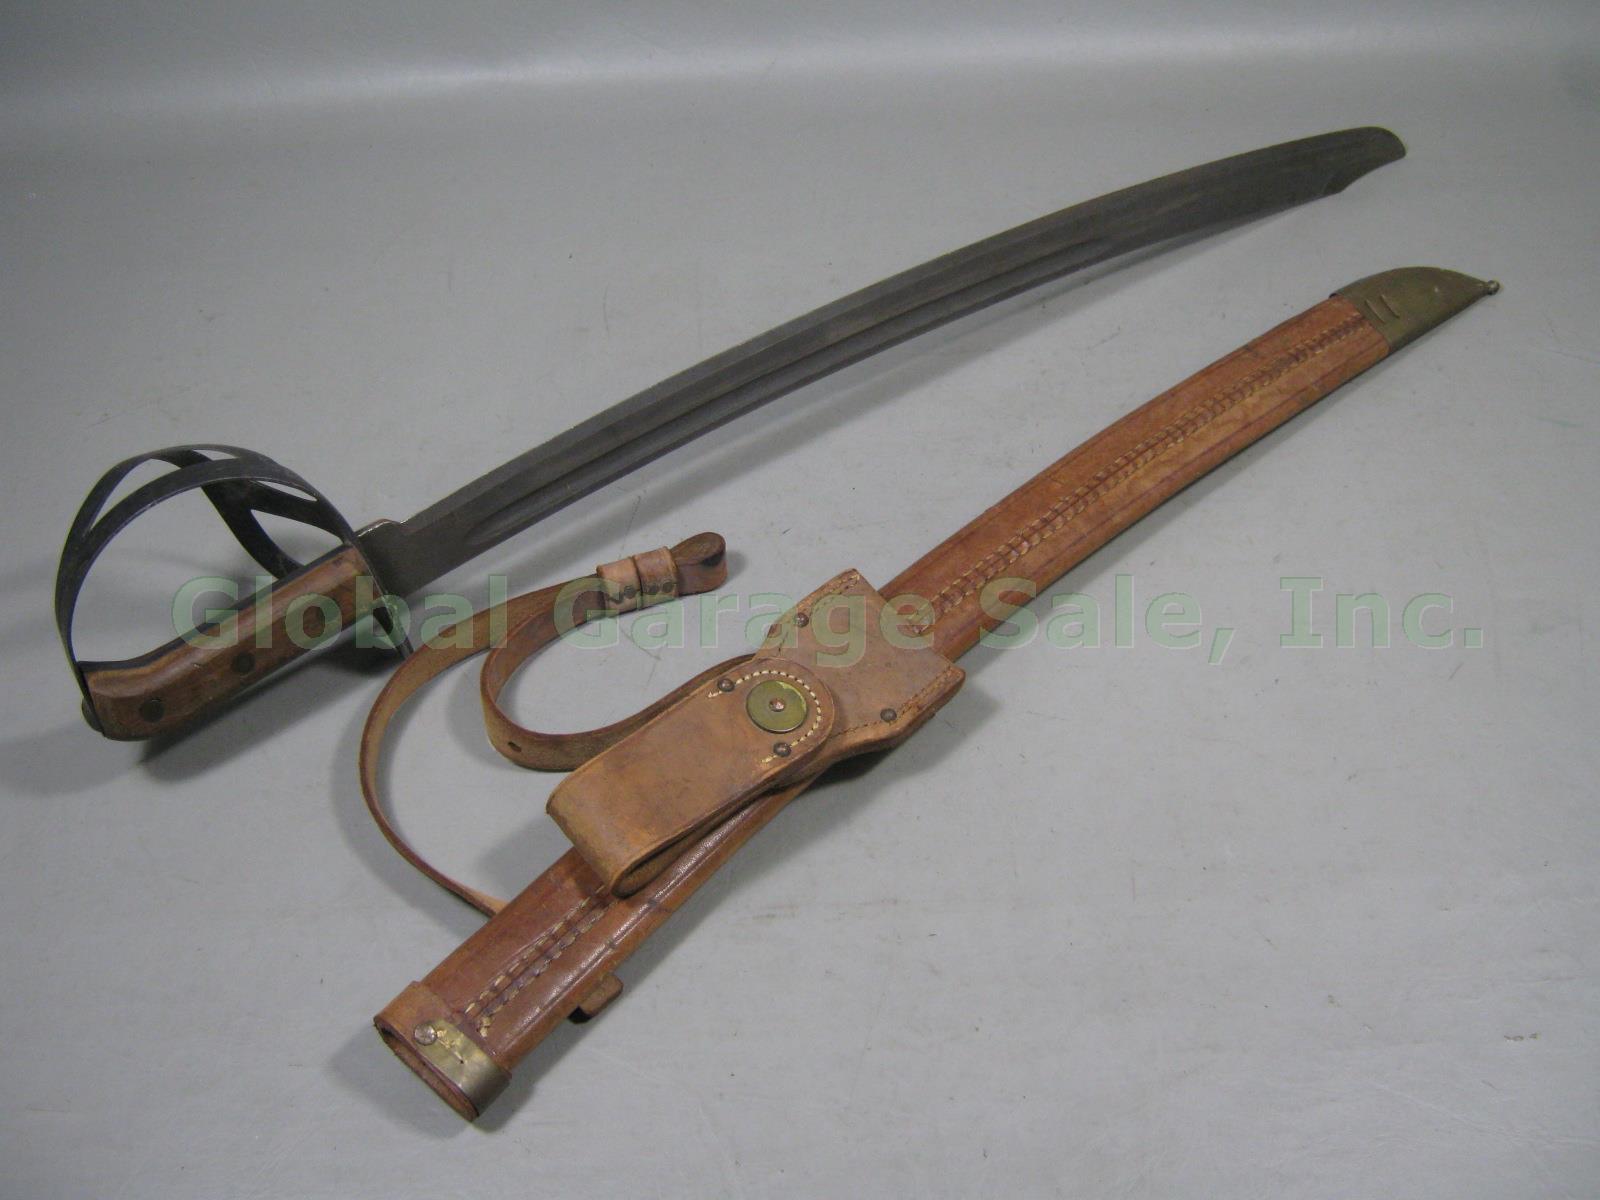 Vtg Milsco USN Navy Naval Klewang Cutlass Sword W/ Original Leather Scabbard NR! 3